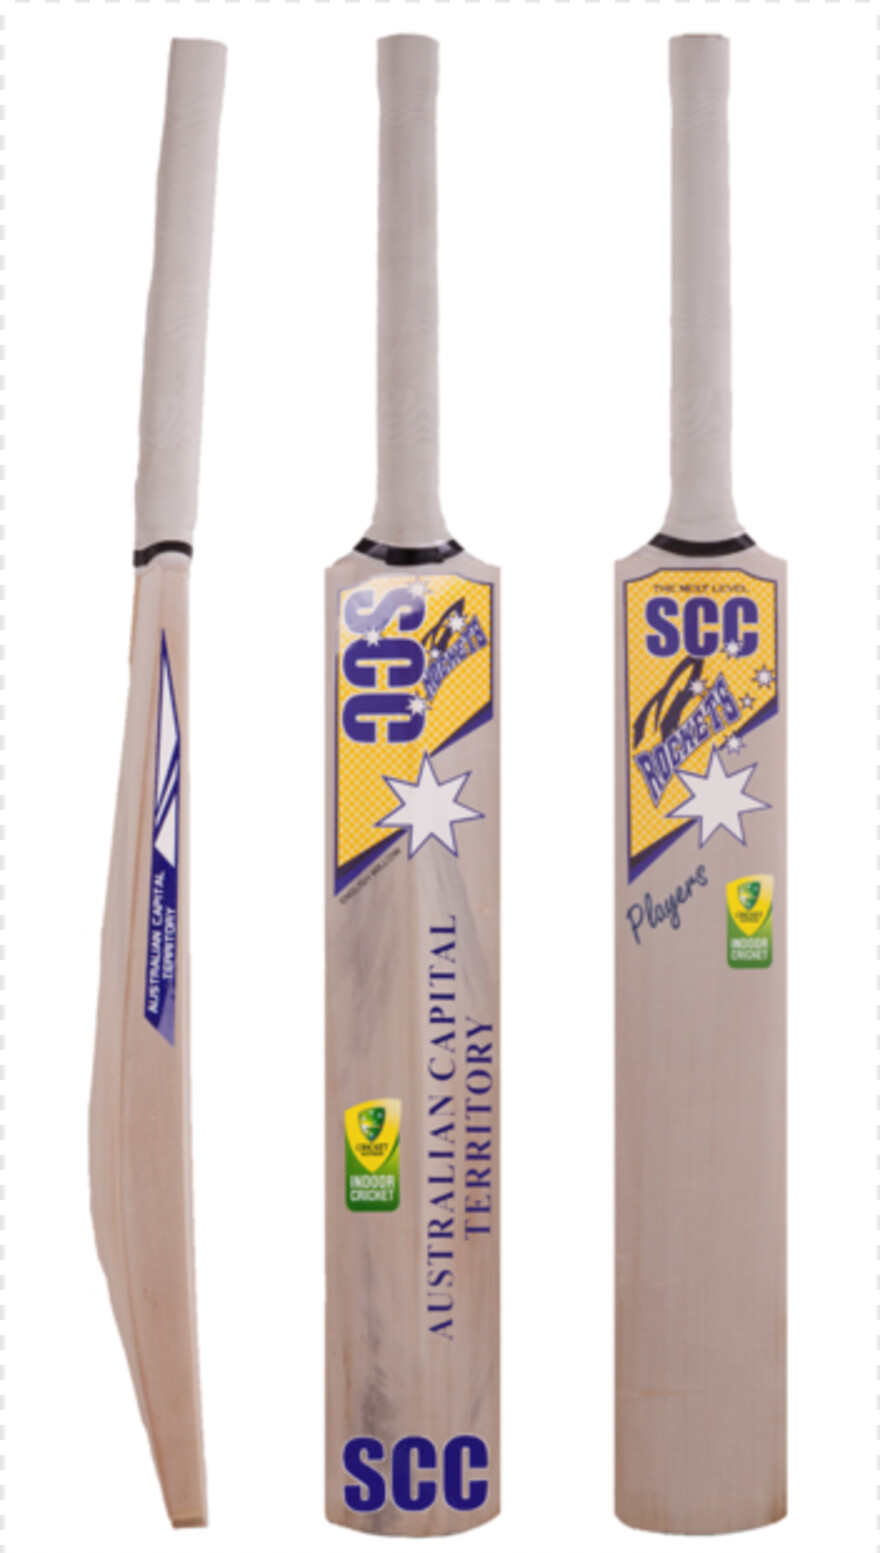  Cricket Vector, Cricket Cup, Cricket Images, Cricket Clipart, Cricket Bat And Ball, Cricket Kit